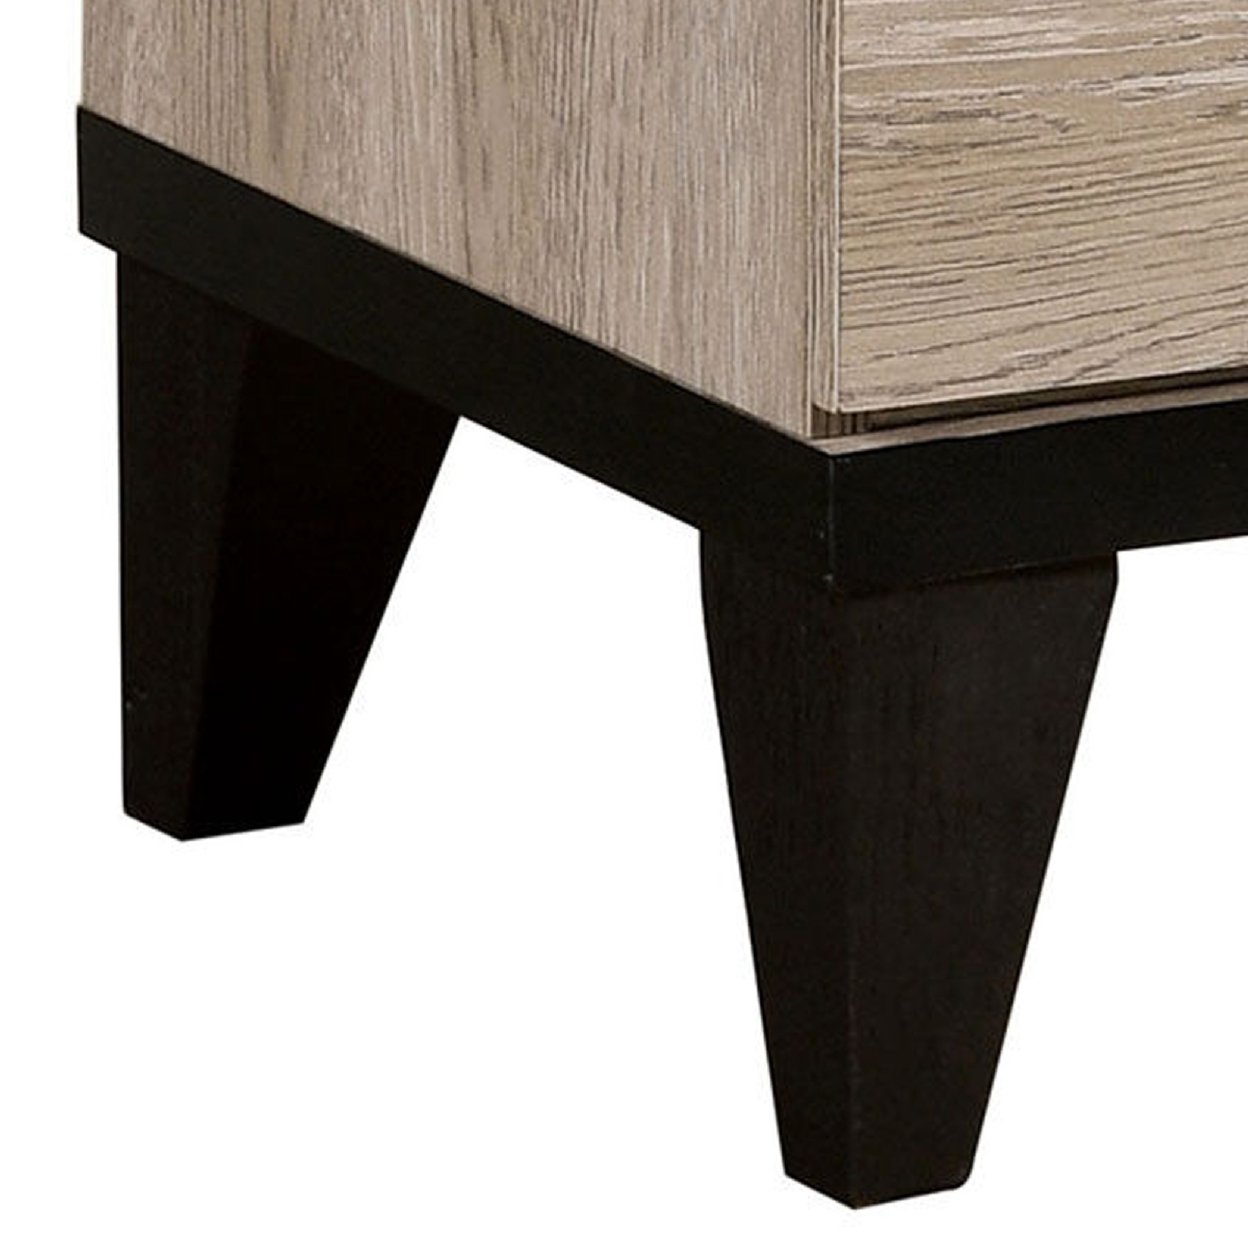 2 Drawer Wooden Nightstand With Grains And Angled Legs, Cream- Saltoro Sherpi